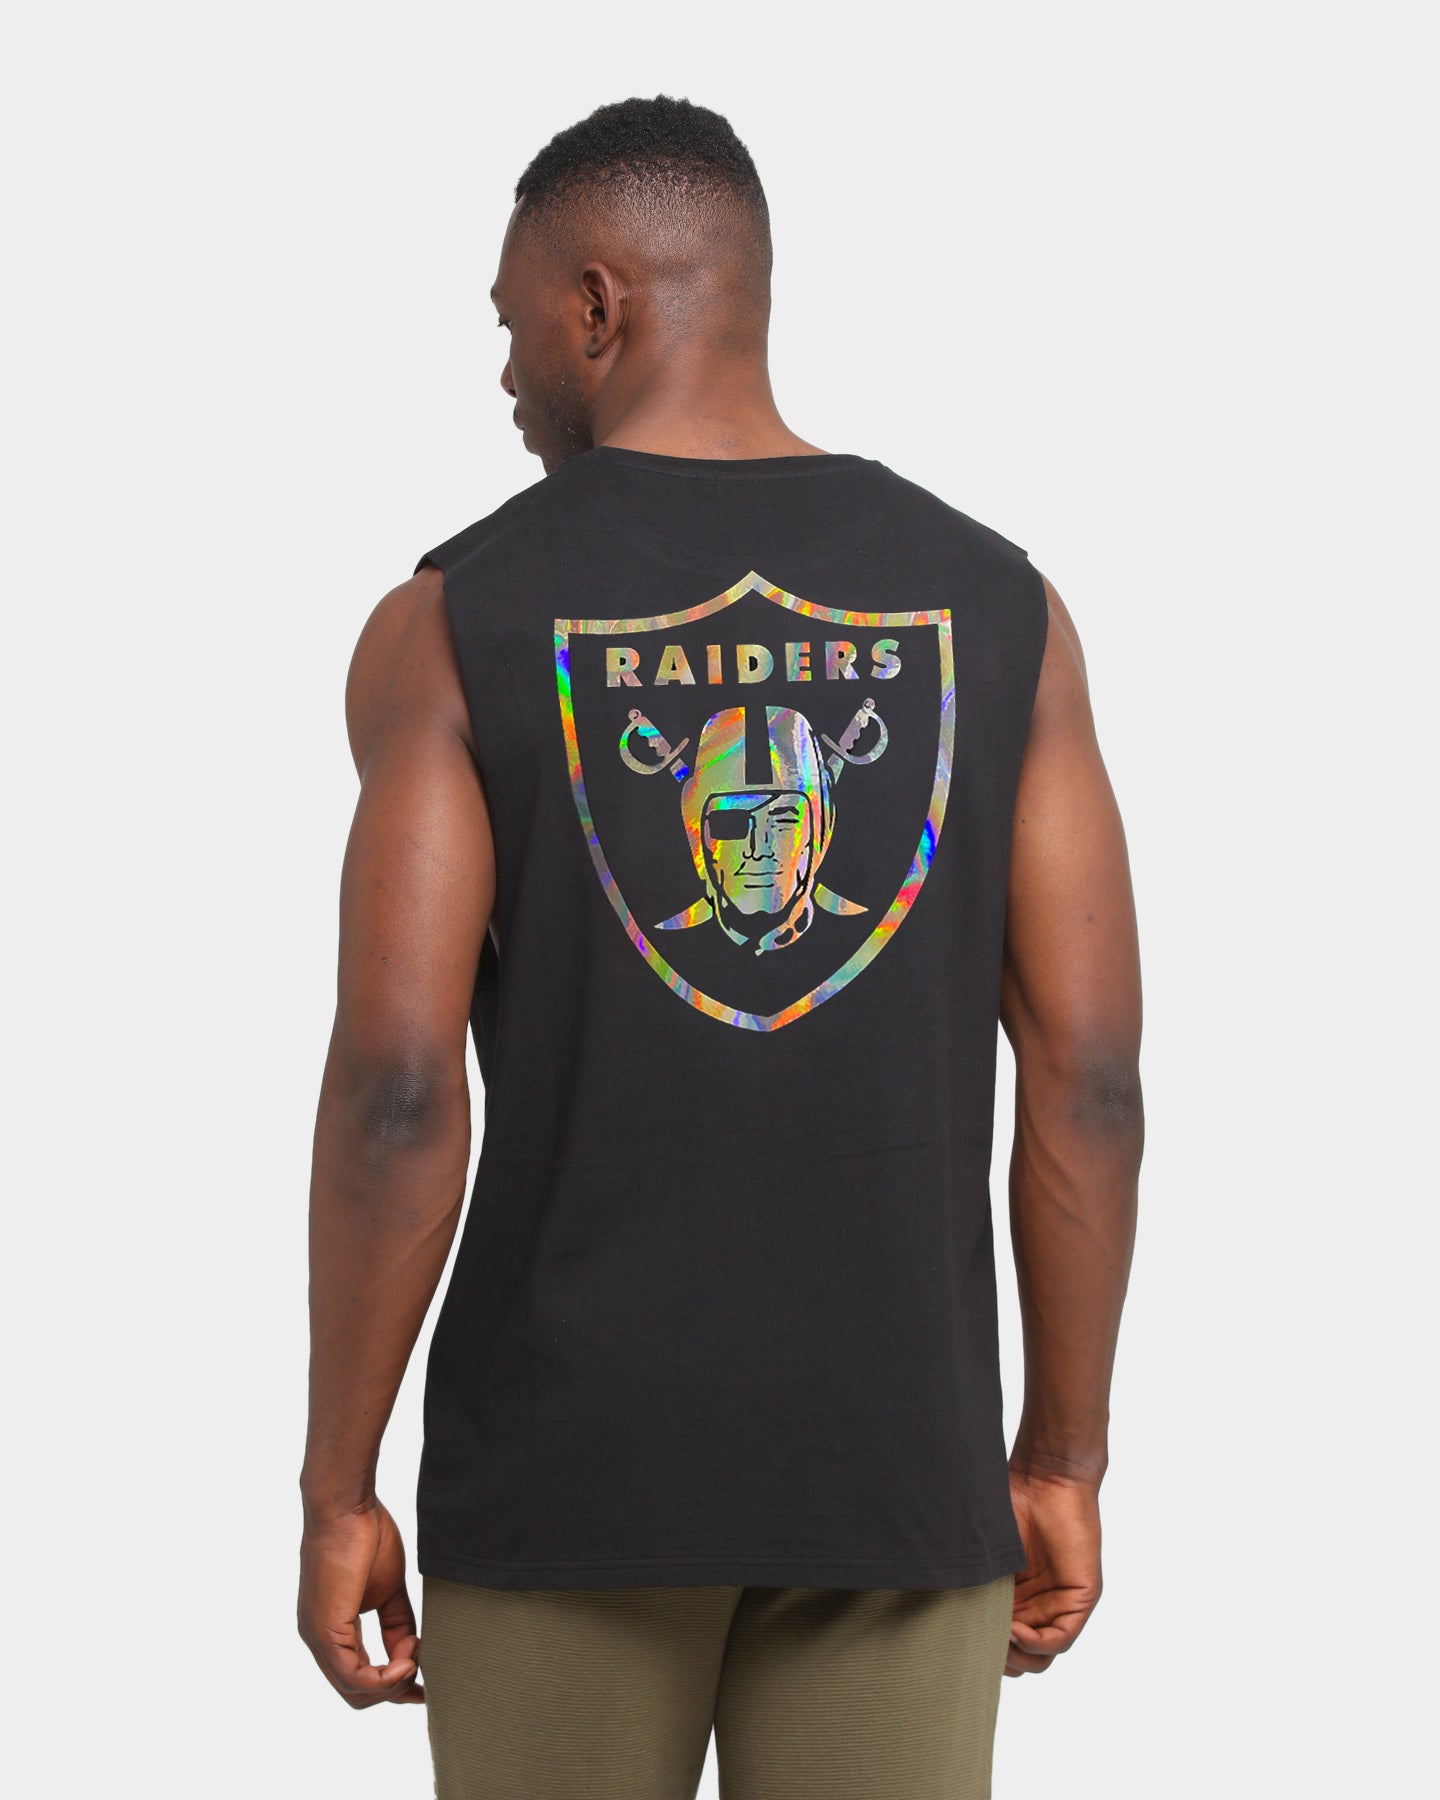 raiders muscle shirt